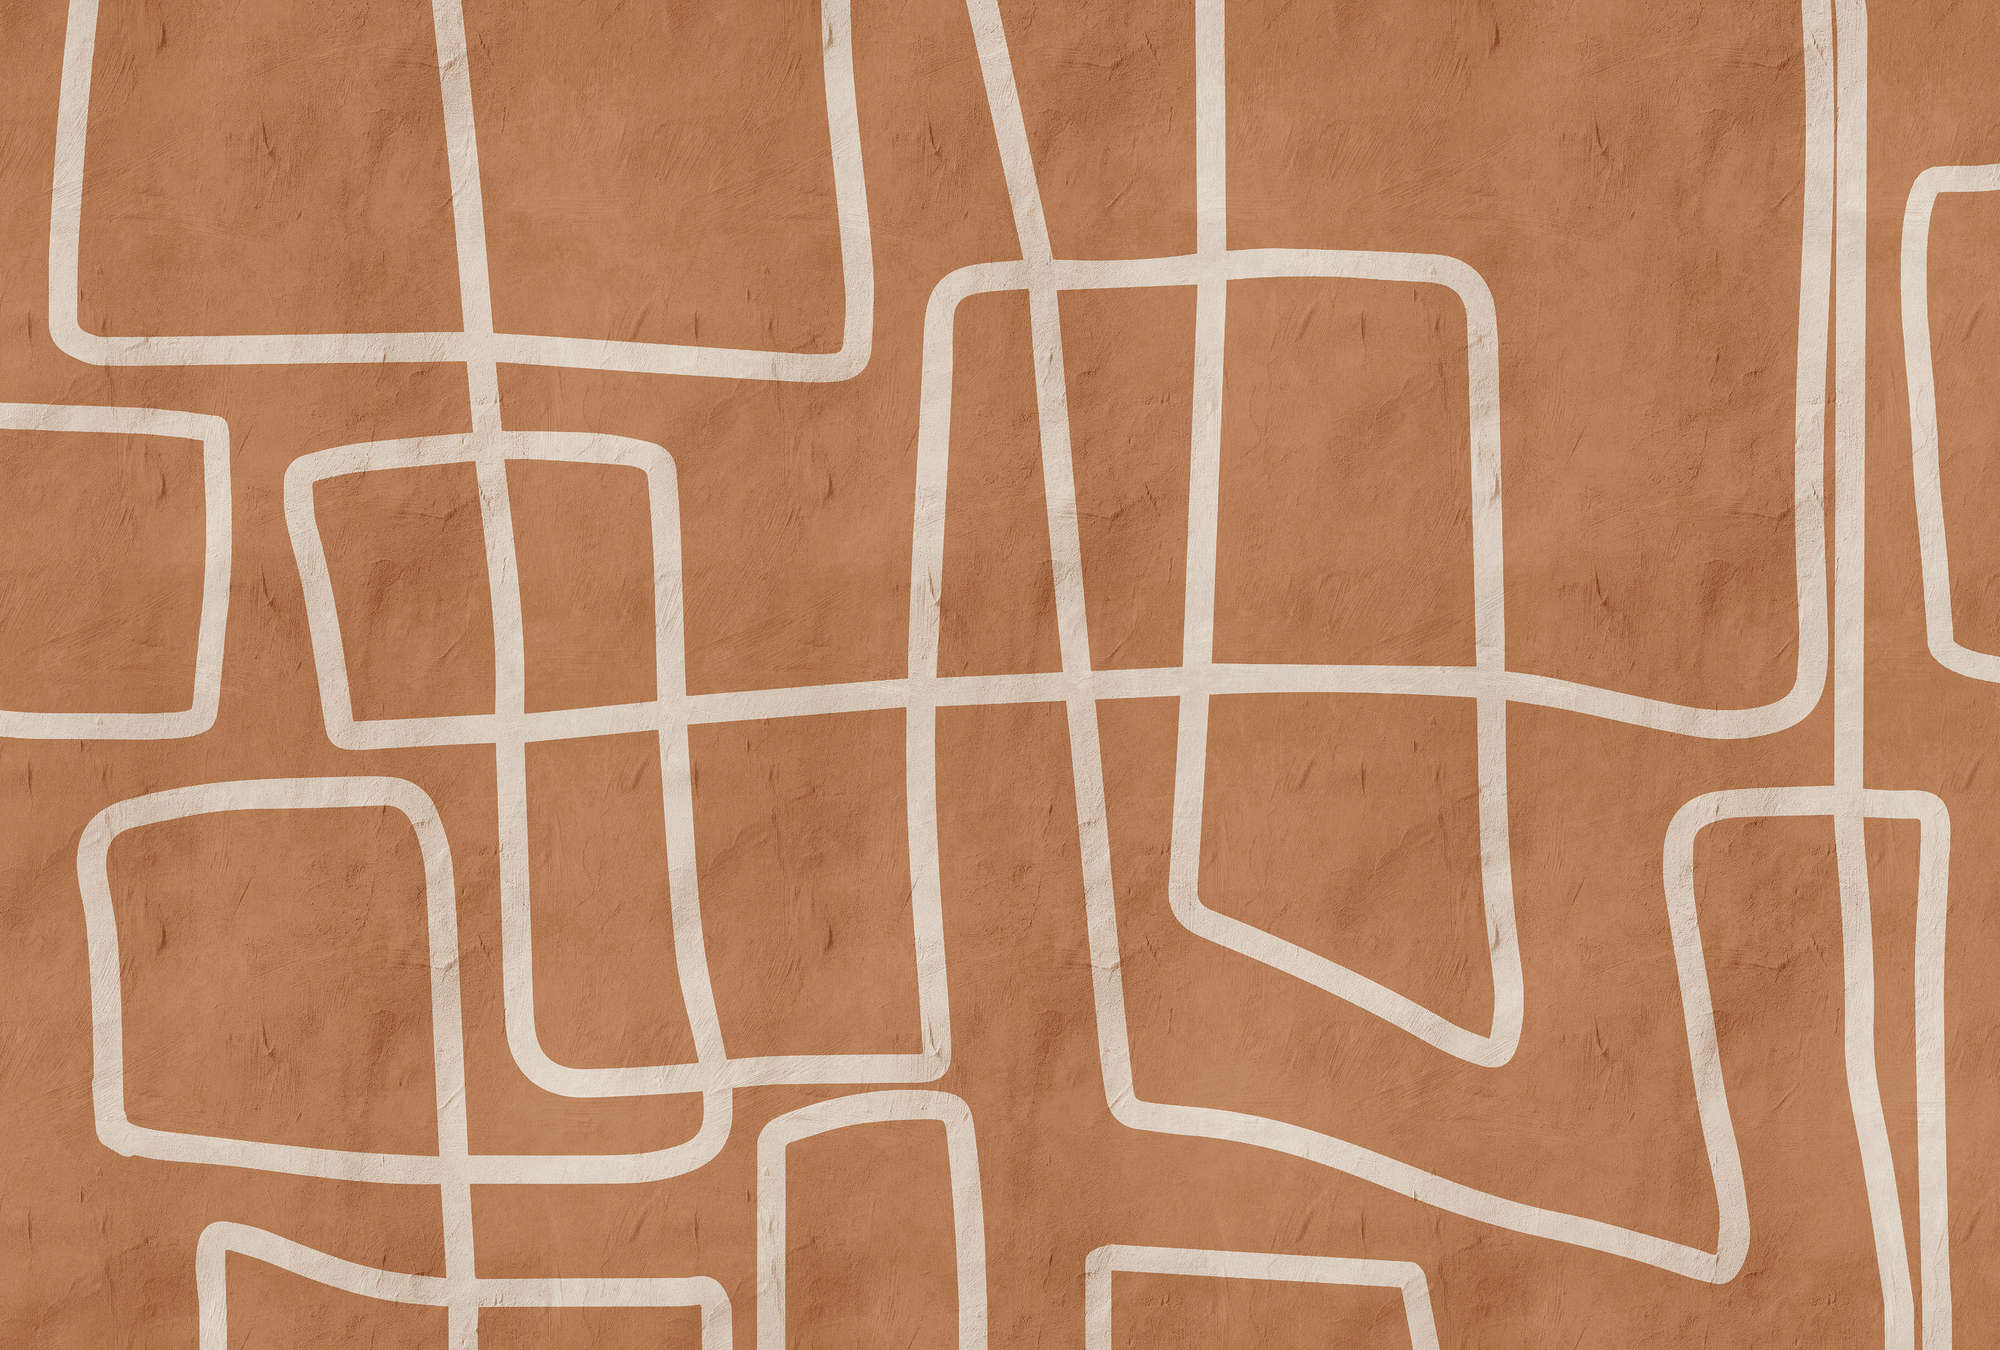             Serengeti 2 - Klei muurschildering terracotta met ethno lijnenpatroon
        